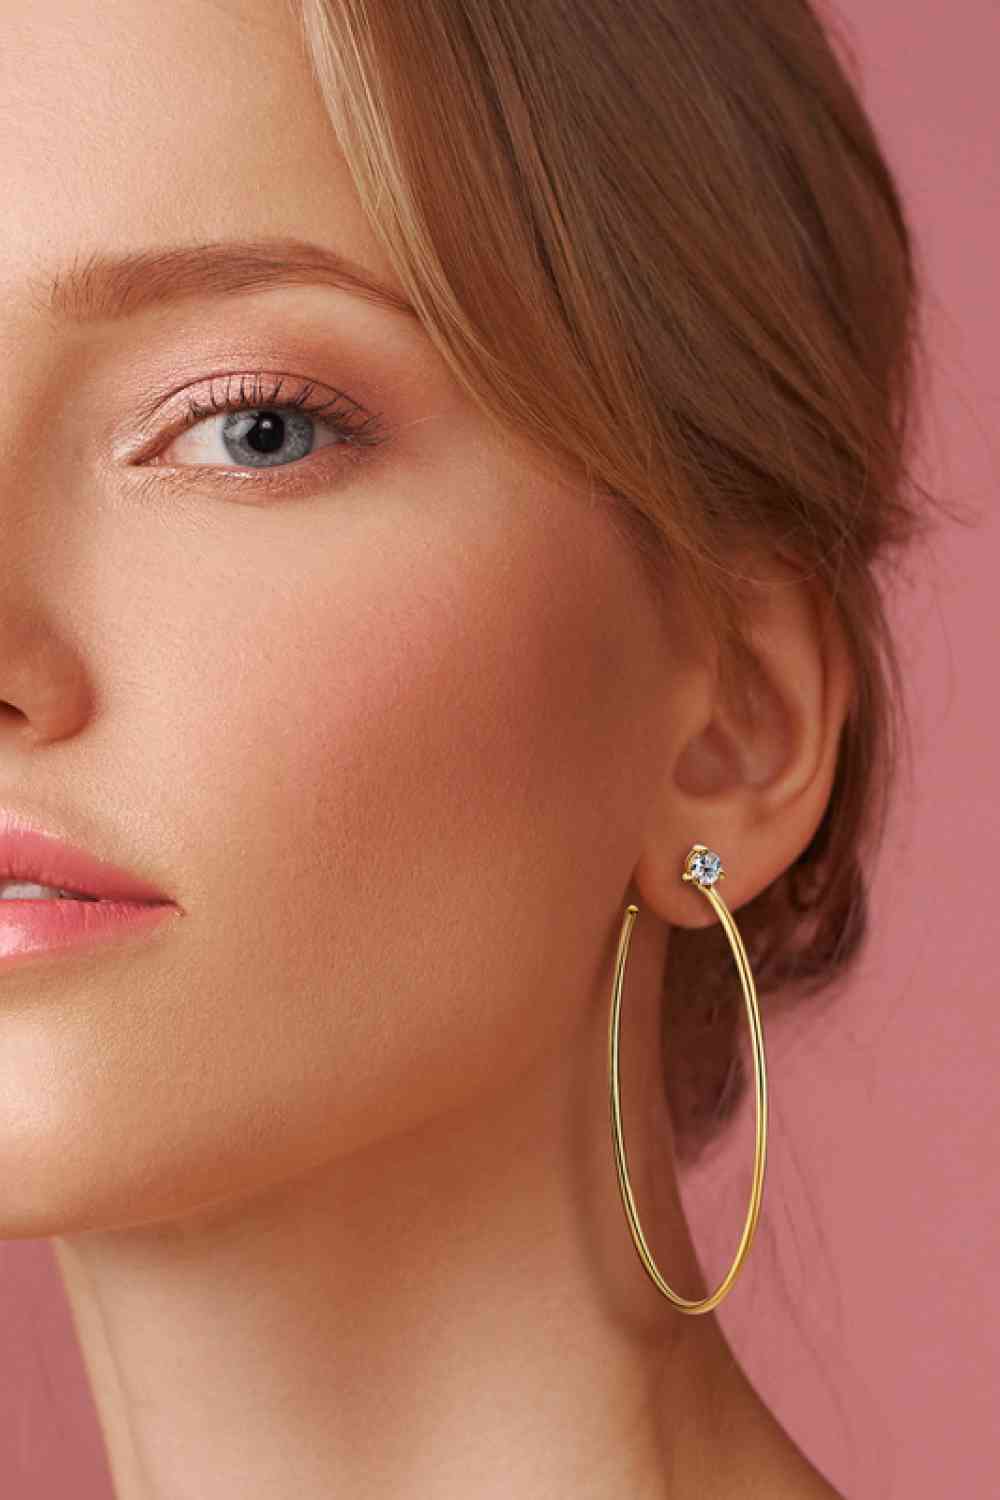 a woman wearing a pair of gold hoop earrings